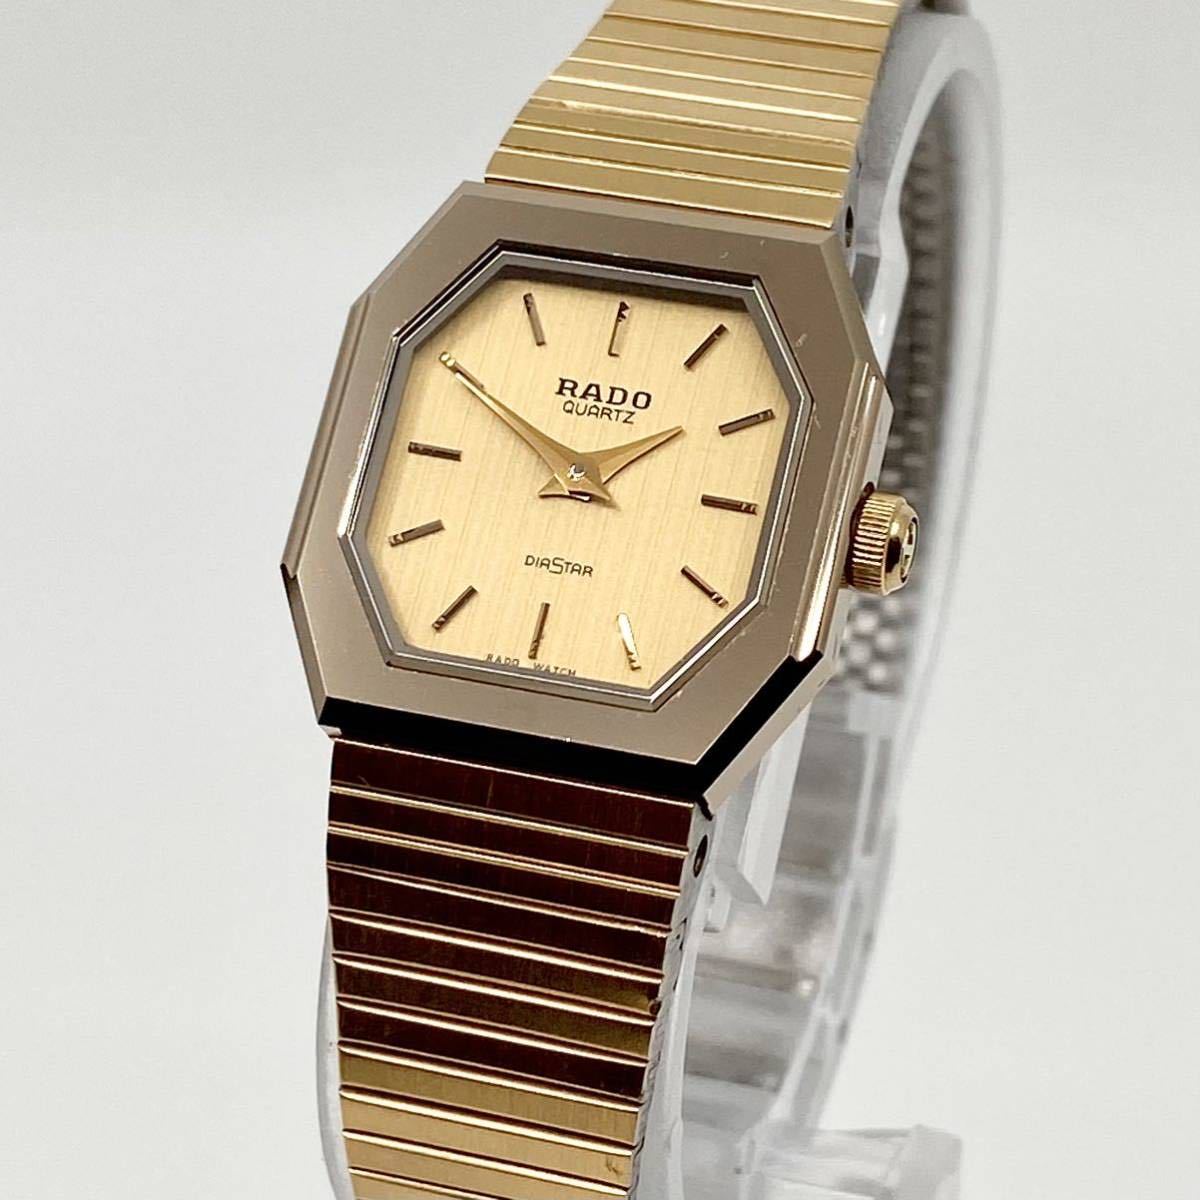 RADO DIASTAR 腕時計 オクタゴン バーインデックス 2針 クォーツ quartz ゴールド 金 ラドー D74_画像1